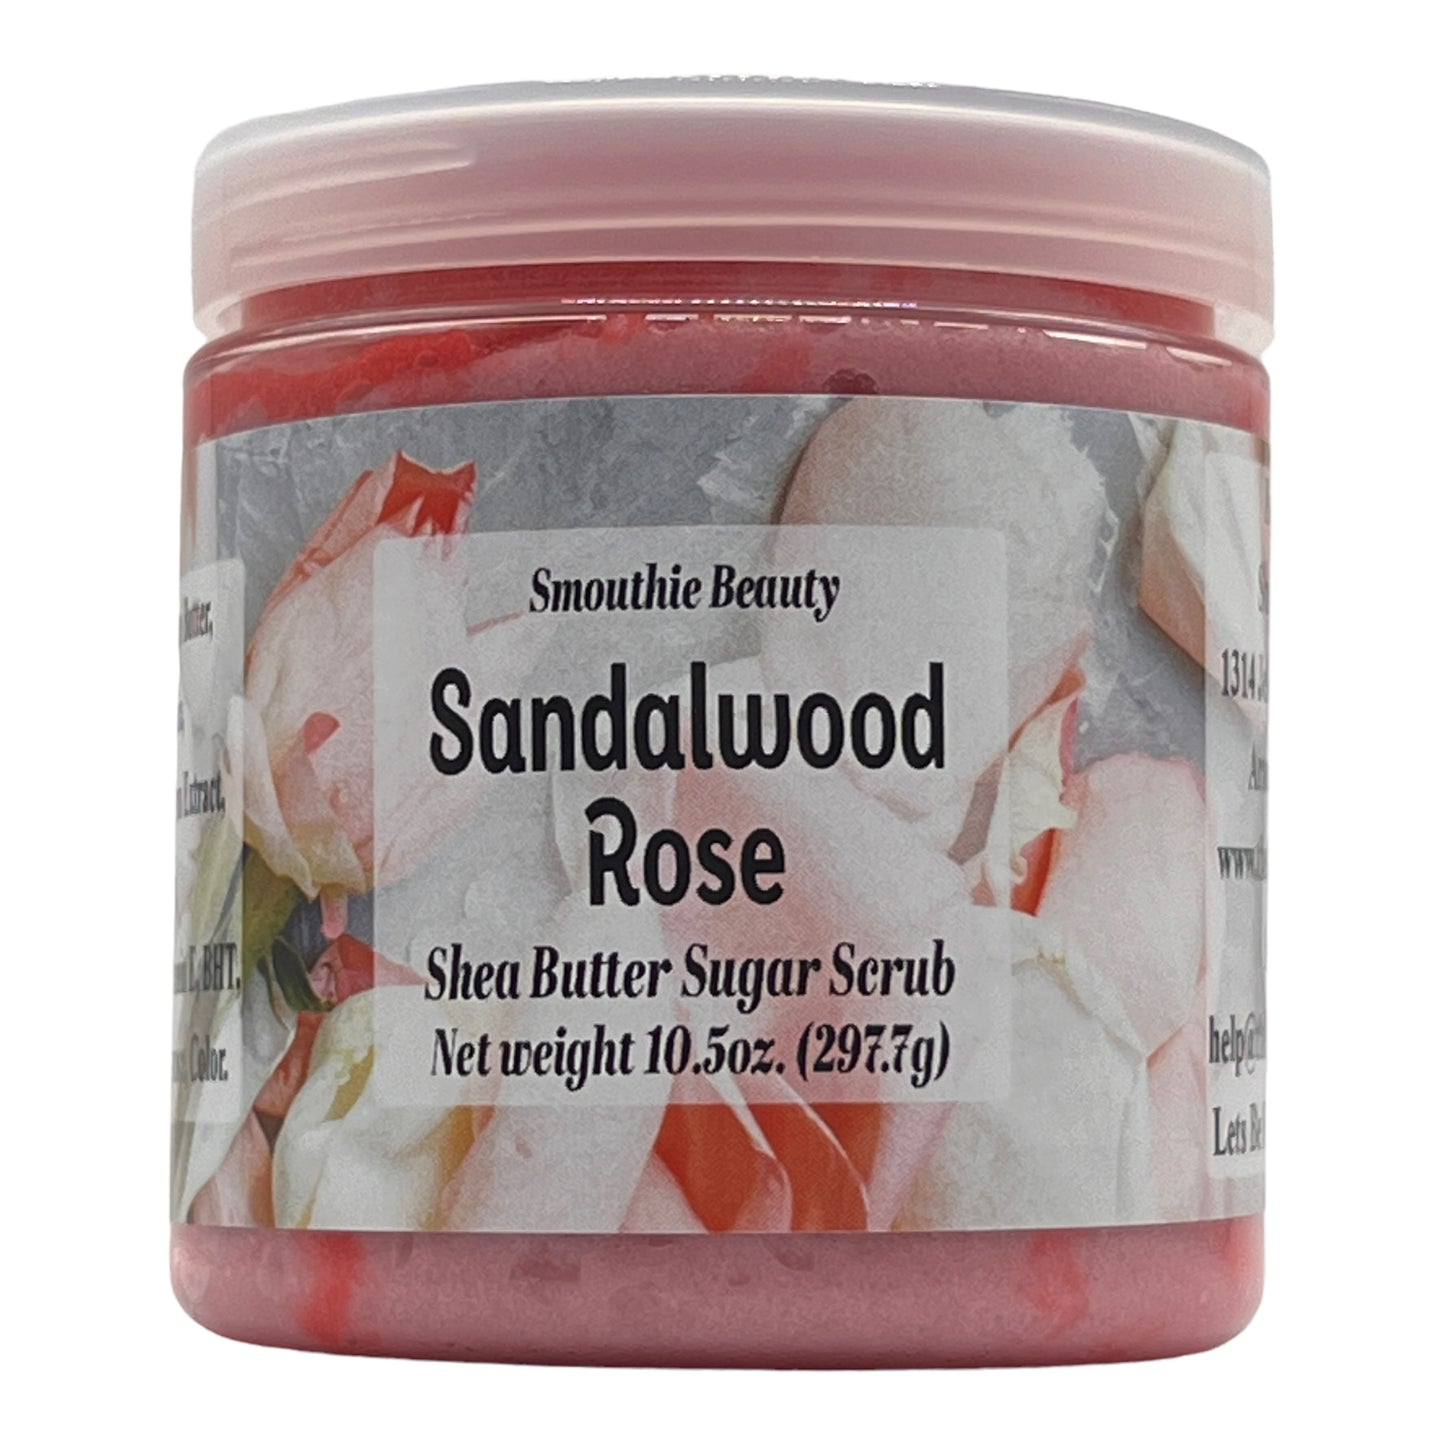 Sandalwood Rose Shea Butter Sugar Scrub